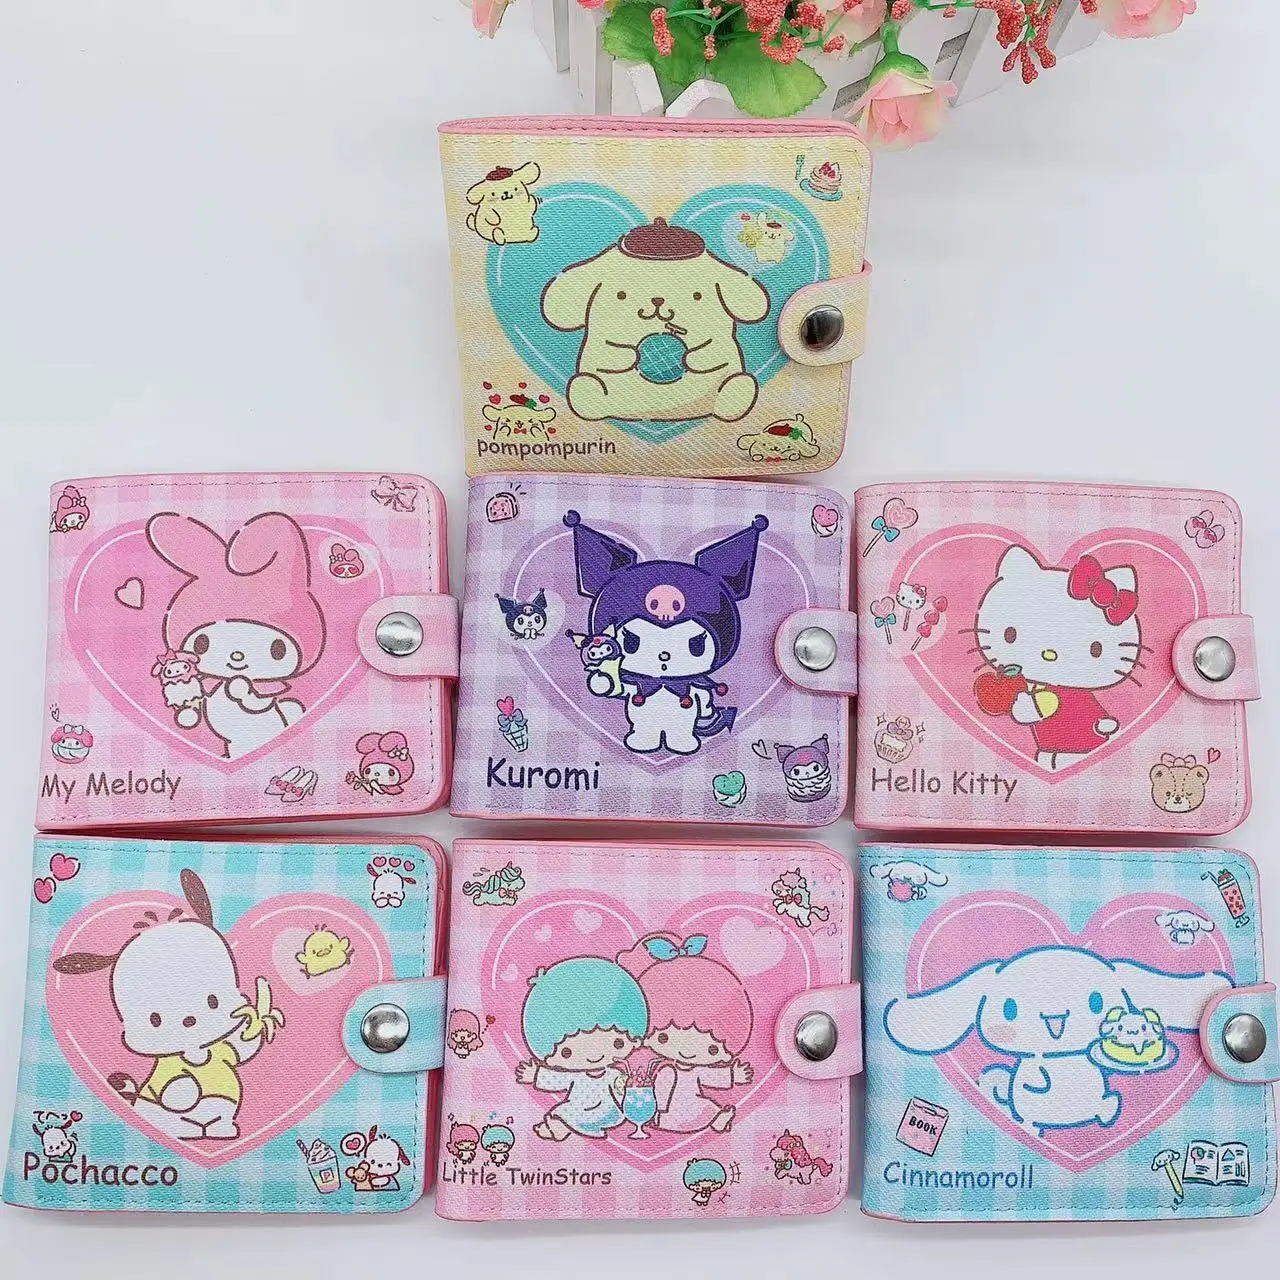 New Sanrio PU Cartoons Women's Wallet Hello Kitty Kulomi Melody Cinnamoroll Portable ID Card Holders Coin Purse Cute Girls Gifts